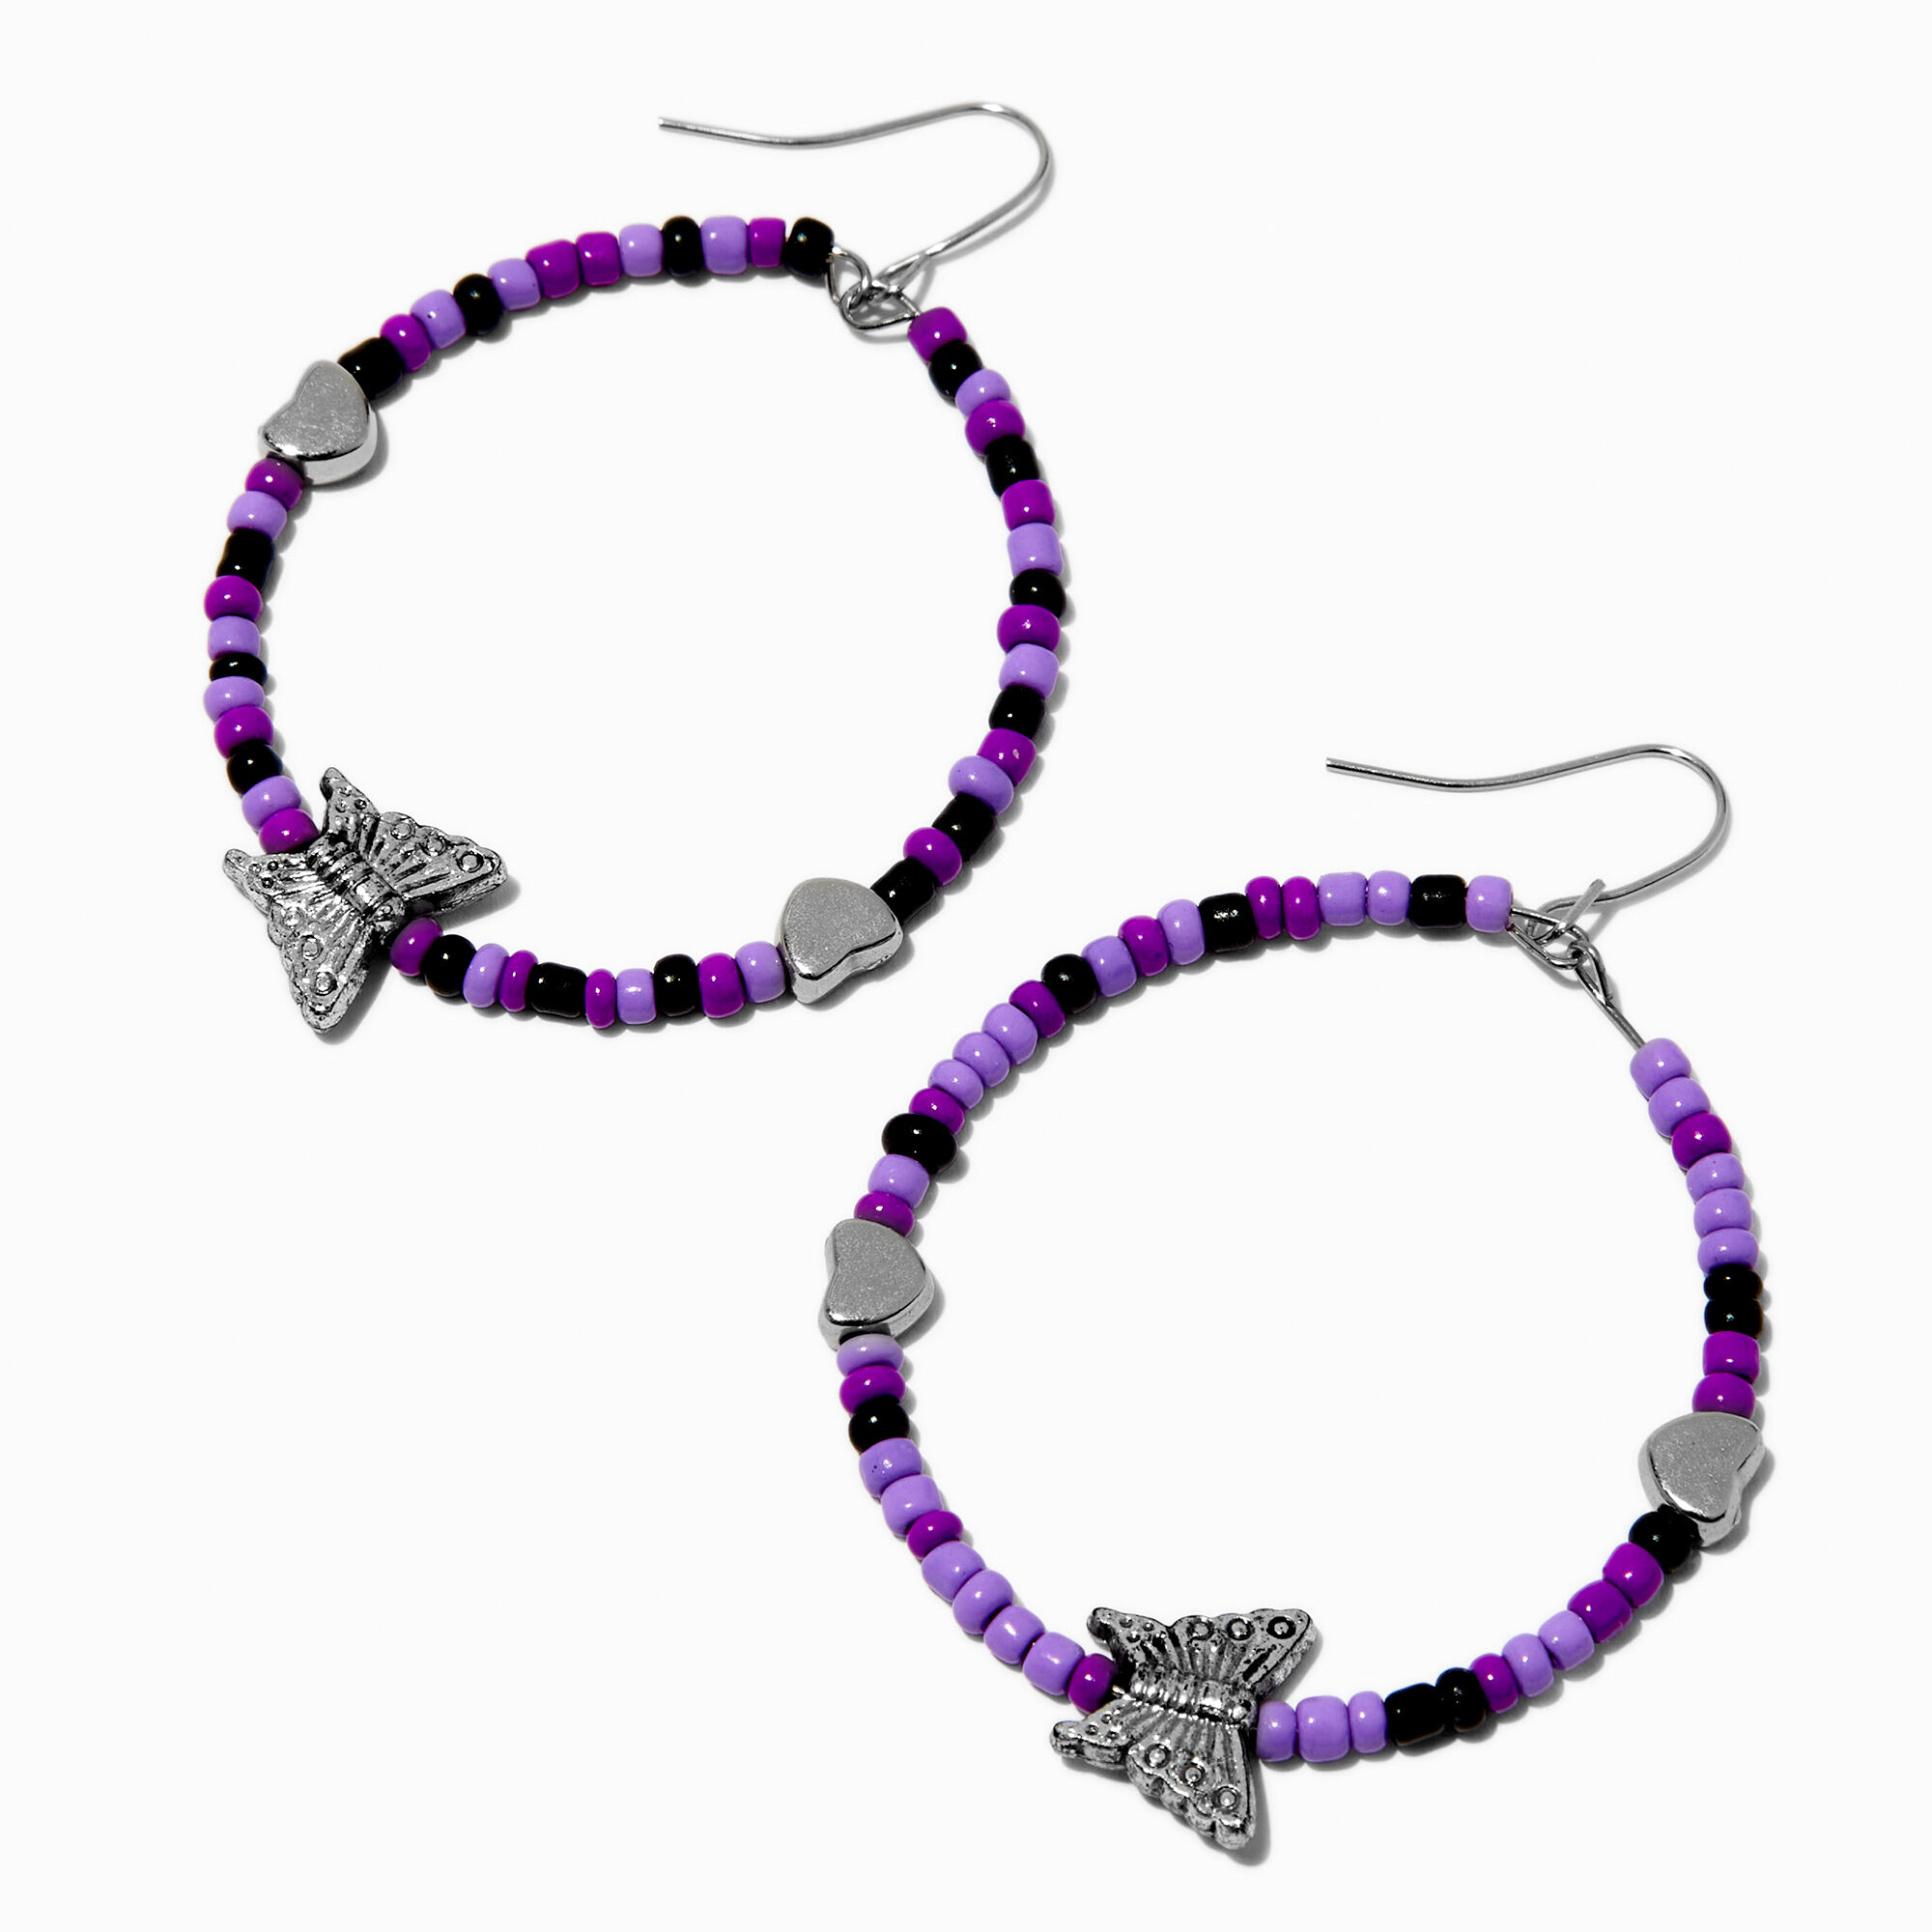 View Claires Butterfly Friendship Bracelet 2 Drop Earrings Purple information